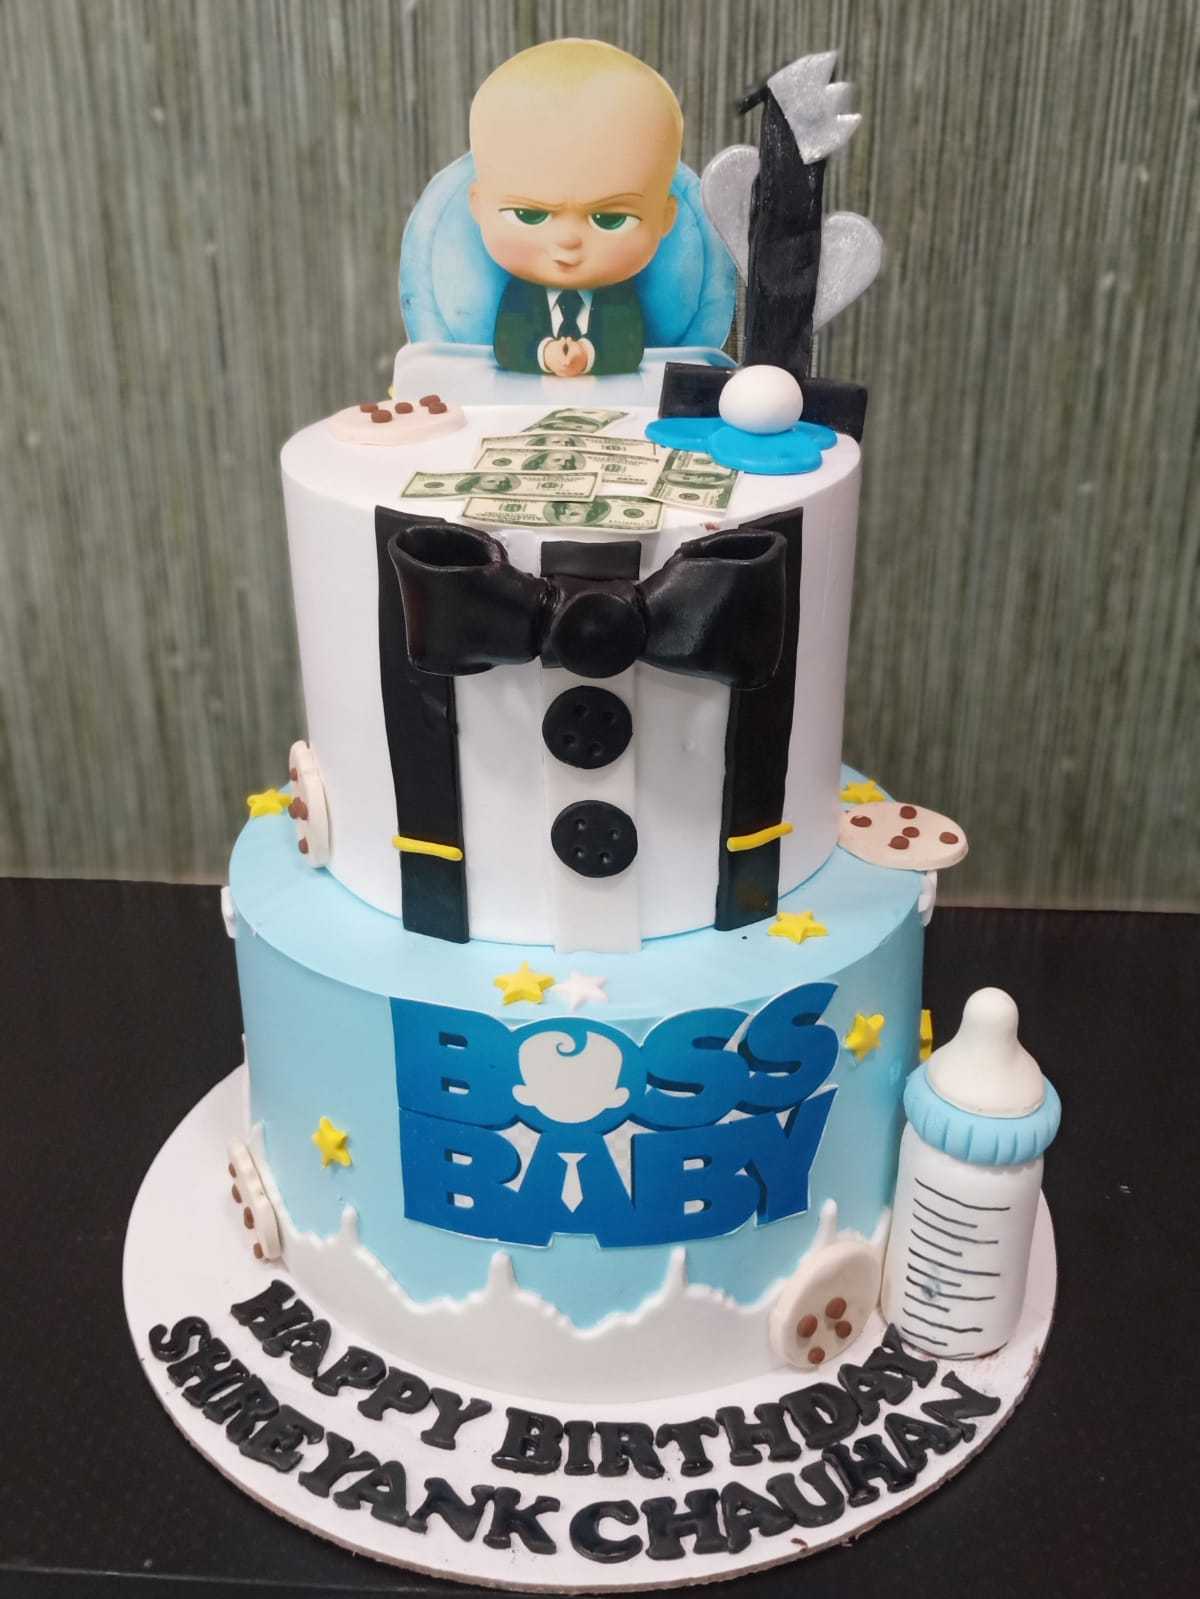 Boss Baby Cake Design |Boss Baby Cake | Designer Cake | Yummy cake